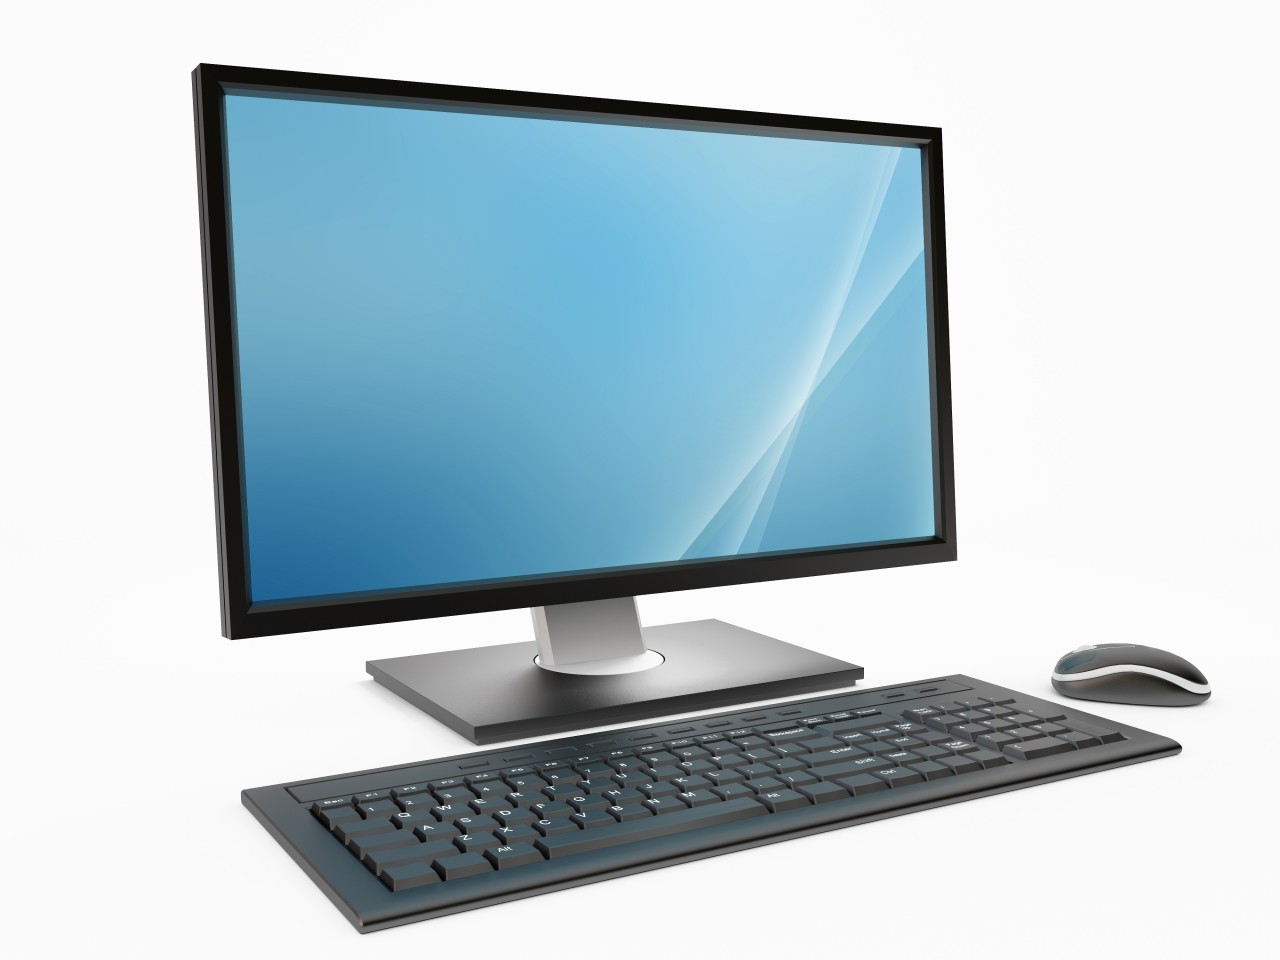 Computers “Desktop, Laptop” Pictures • Elsoar